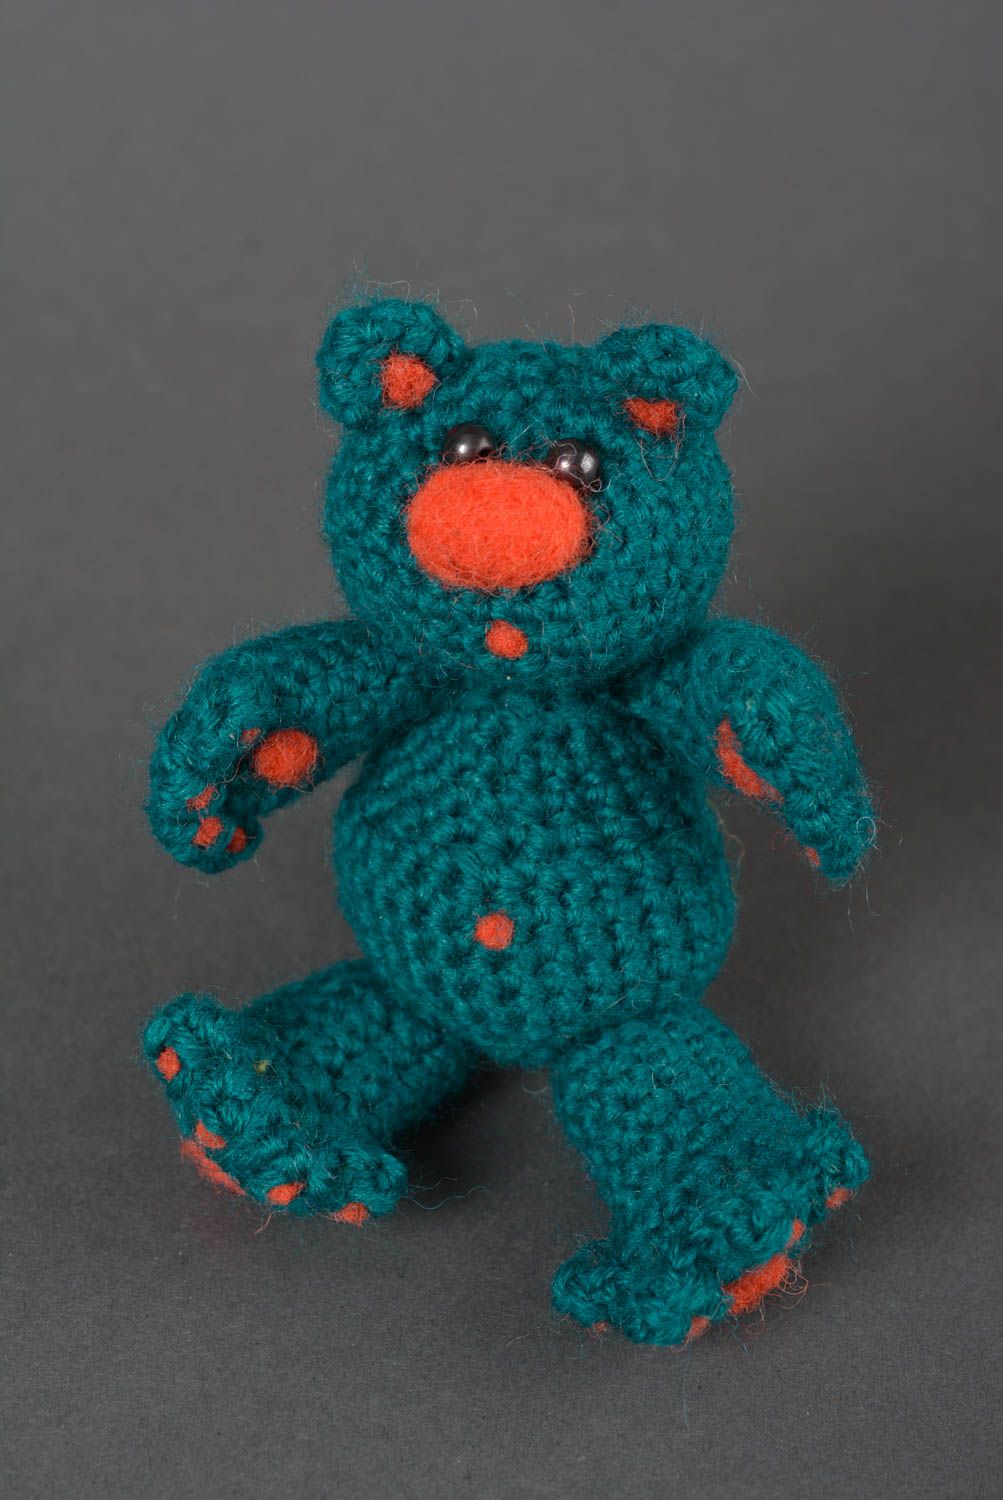 Crocheted toy handmade interior fabric doll present for children baby gift photo 1